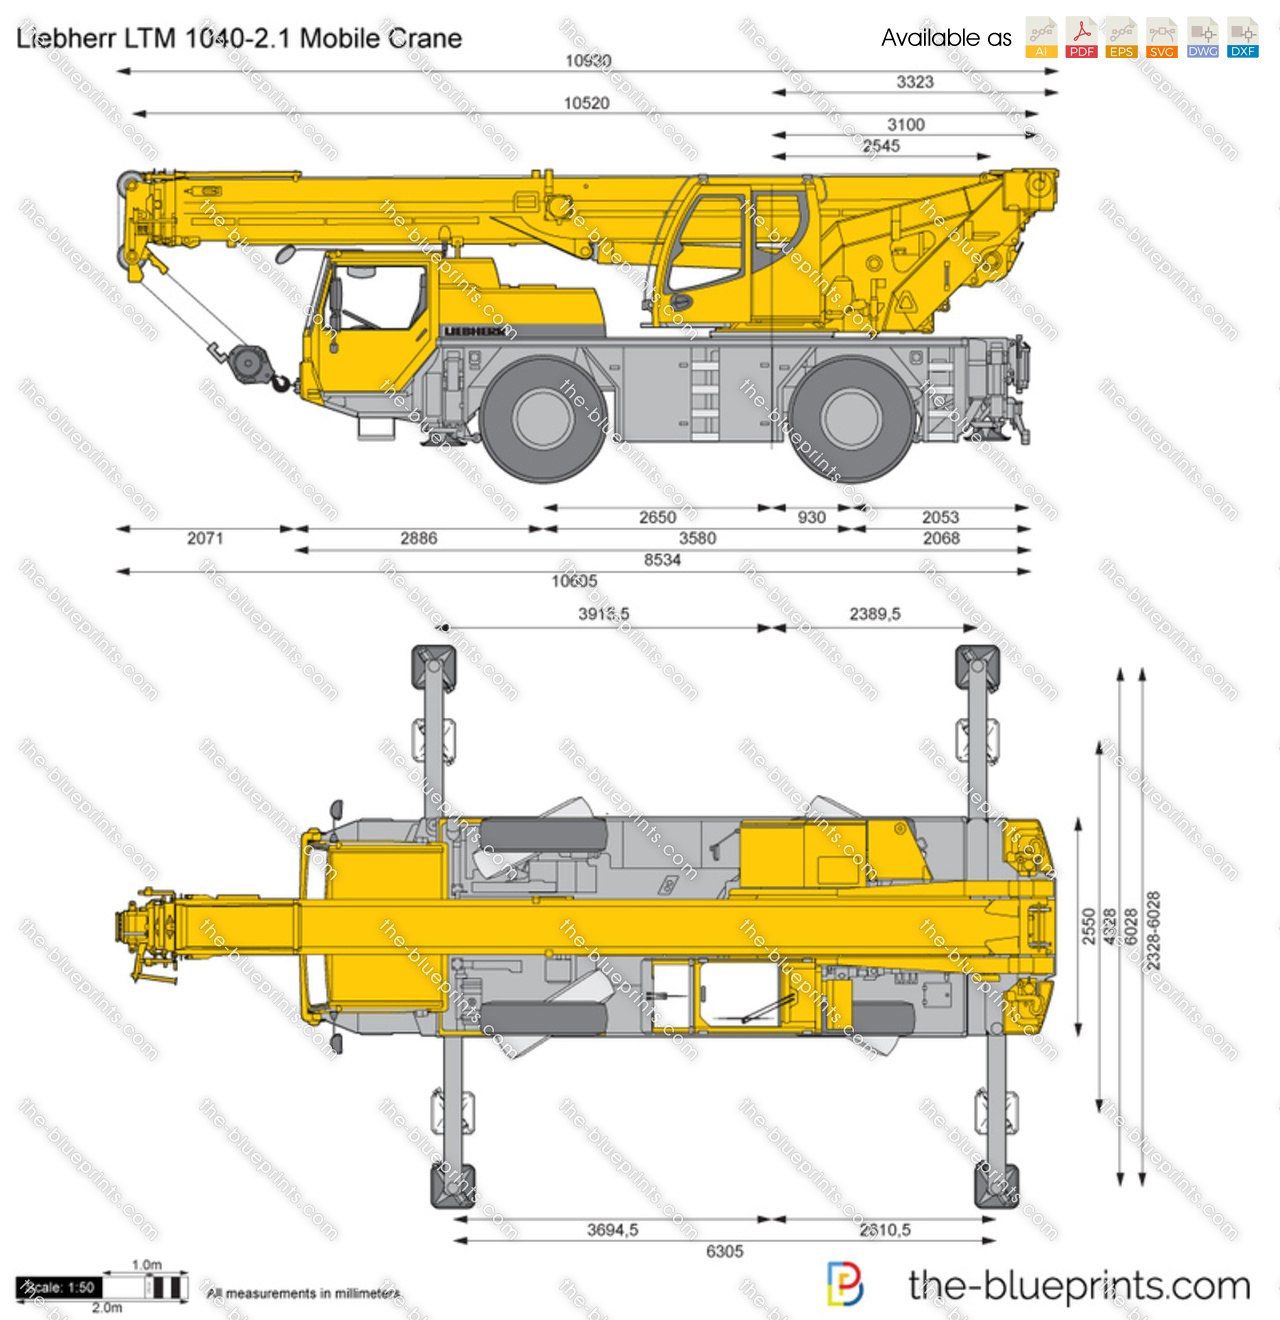 Liebherr LTM 1040-2.1 Mobile Crane